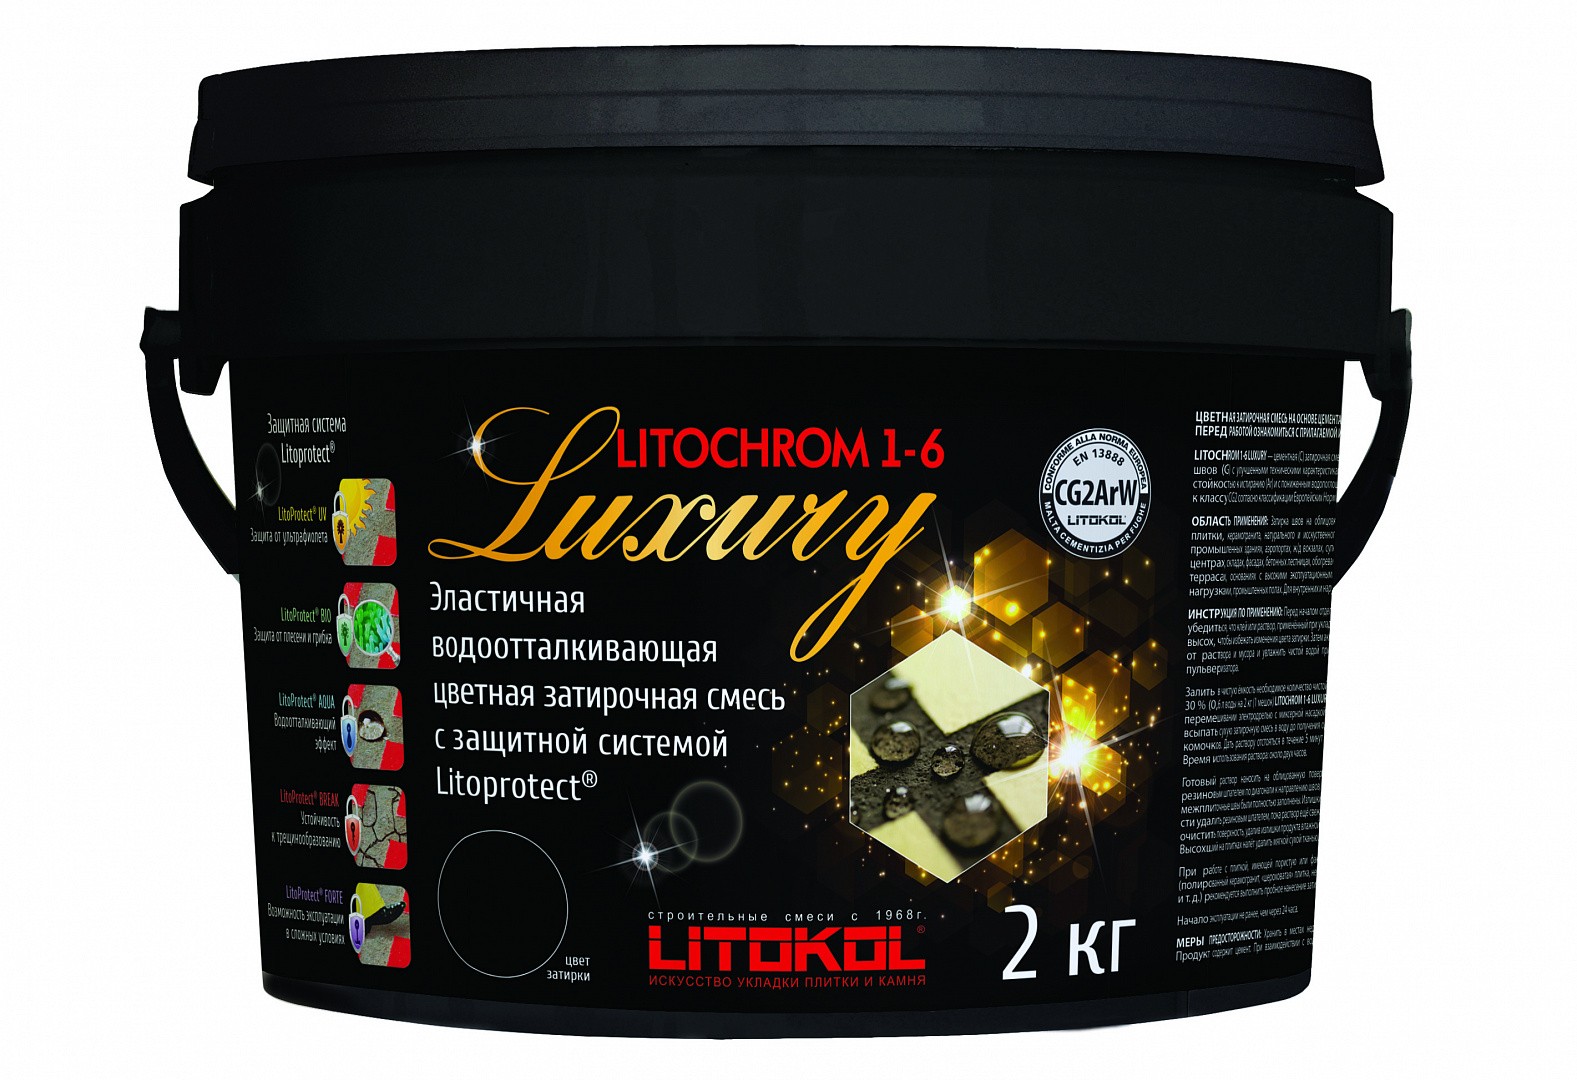 Цементная затирочная смесь LITOCHROM 1-6 LUXURY C.20